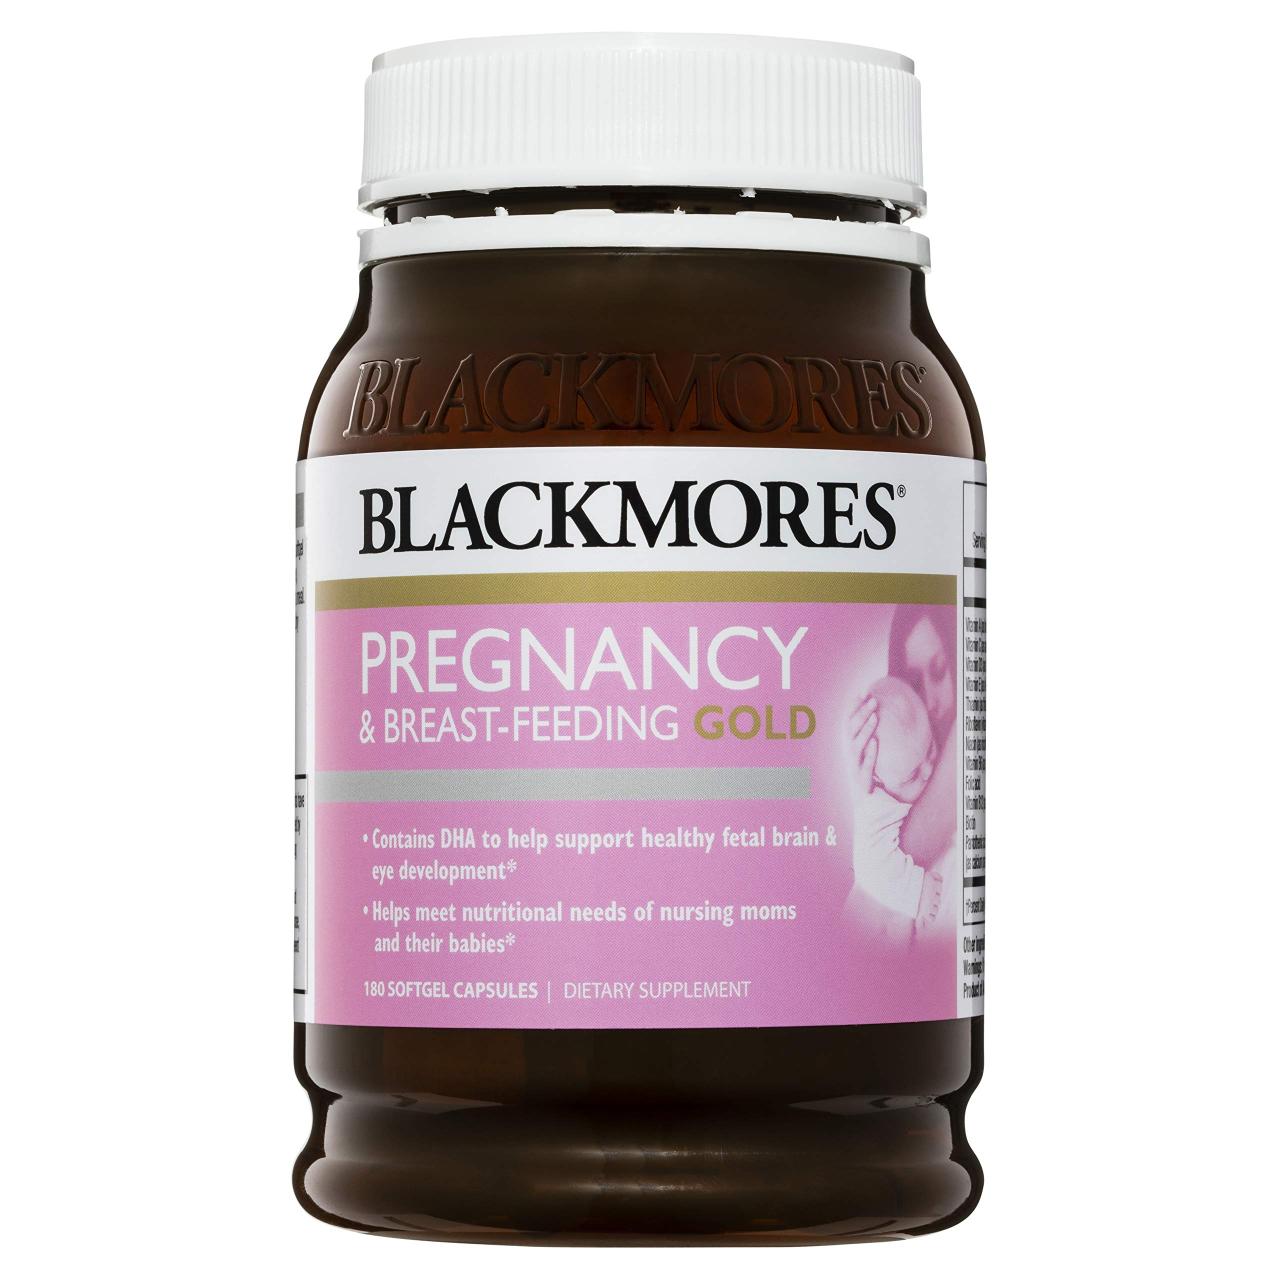 Blackmore pregnancy manfaat